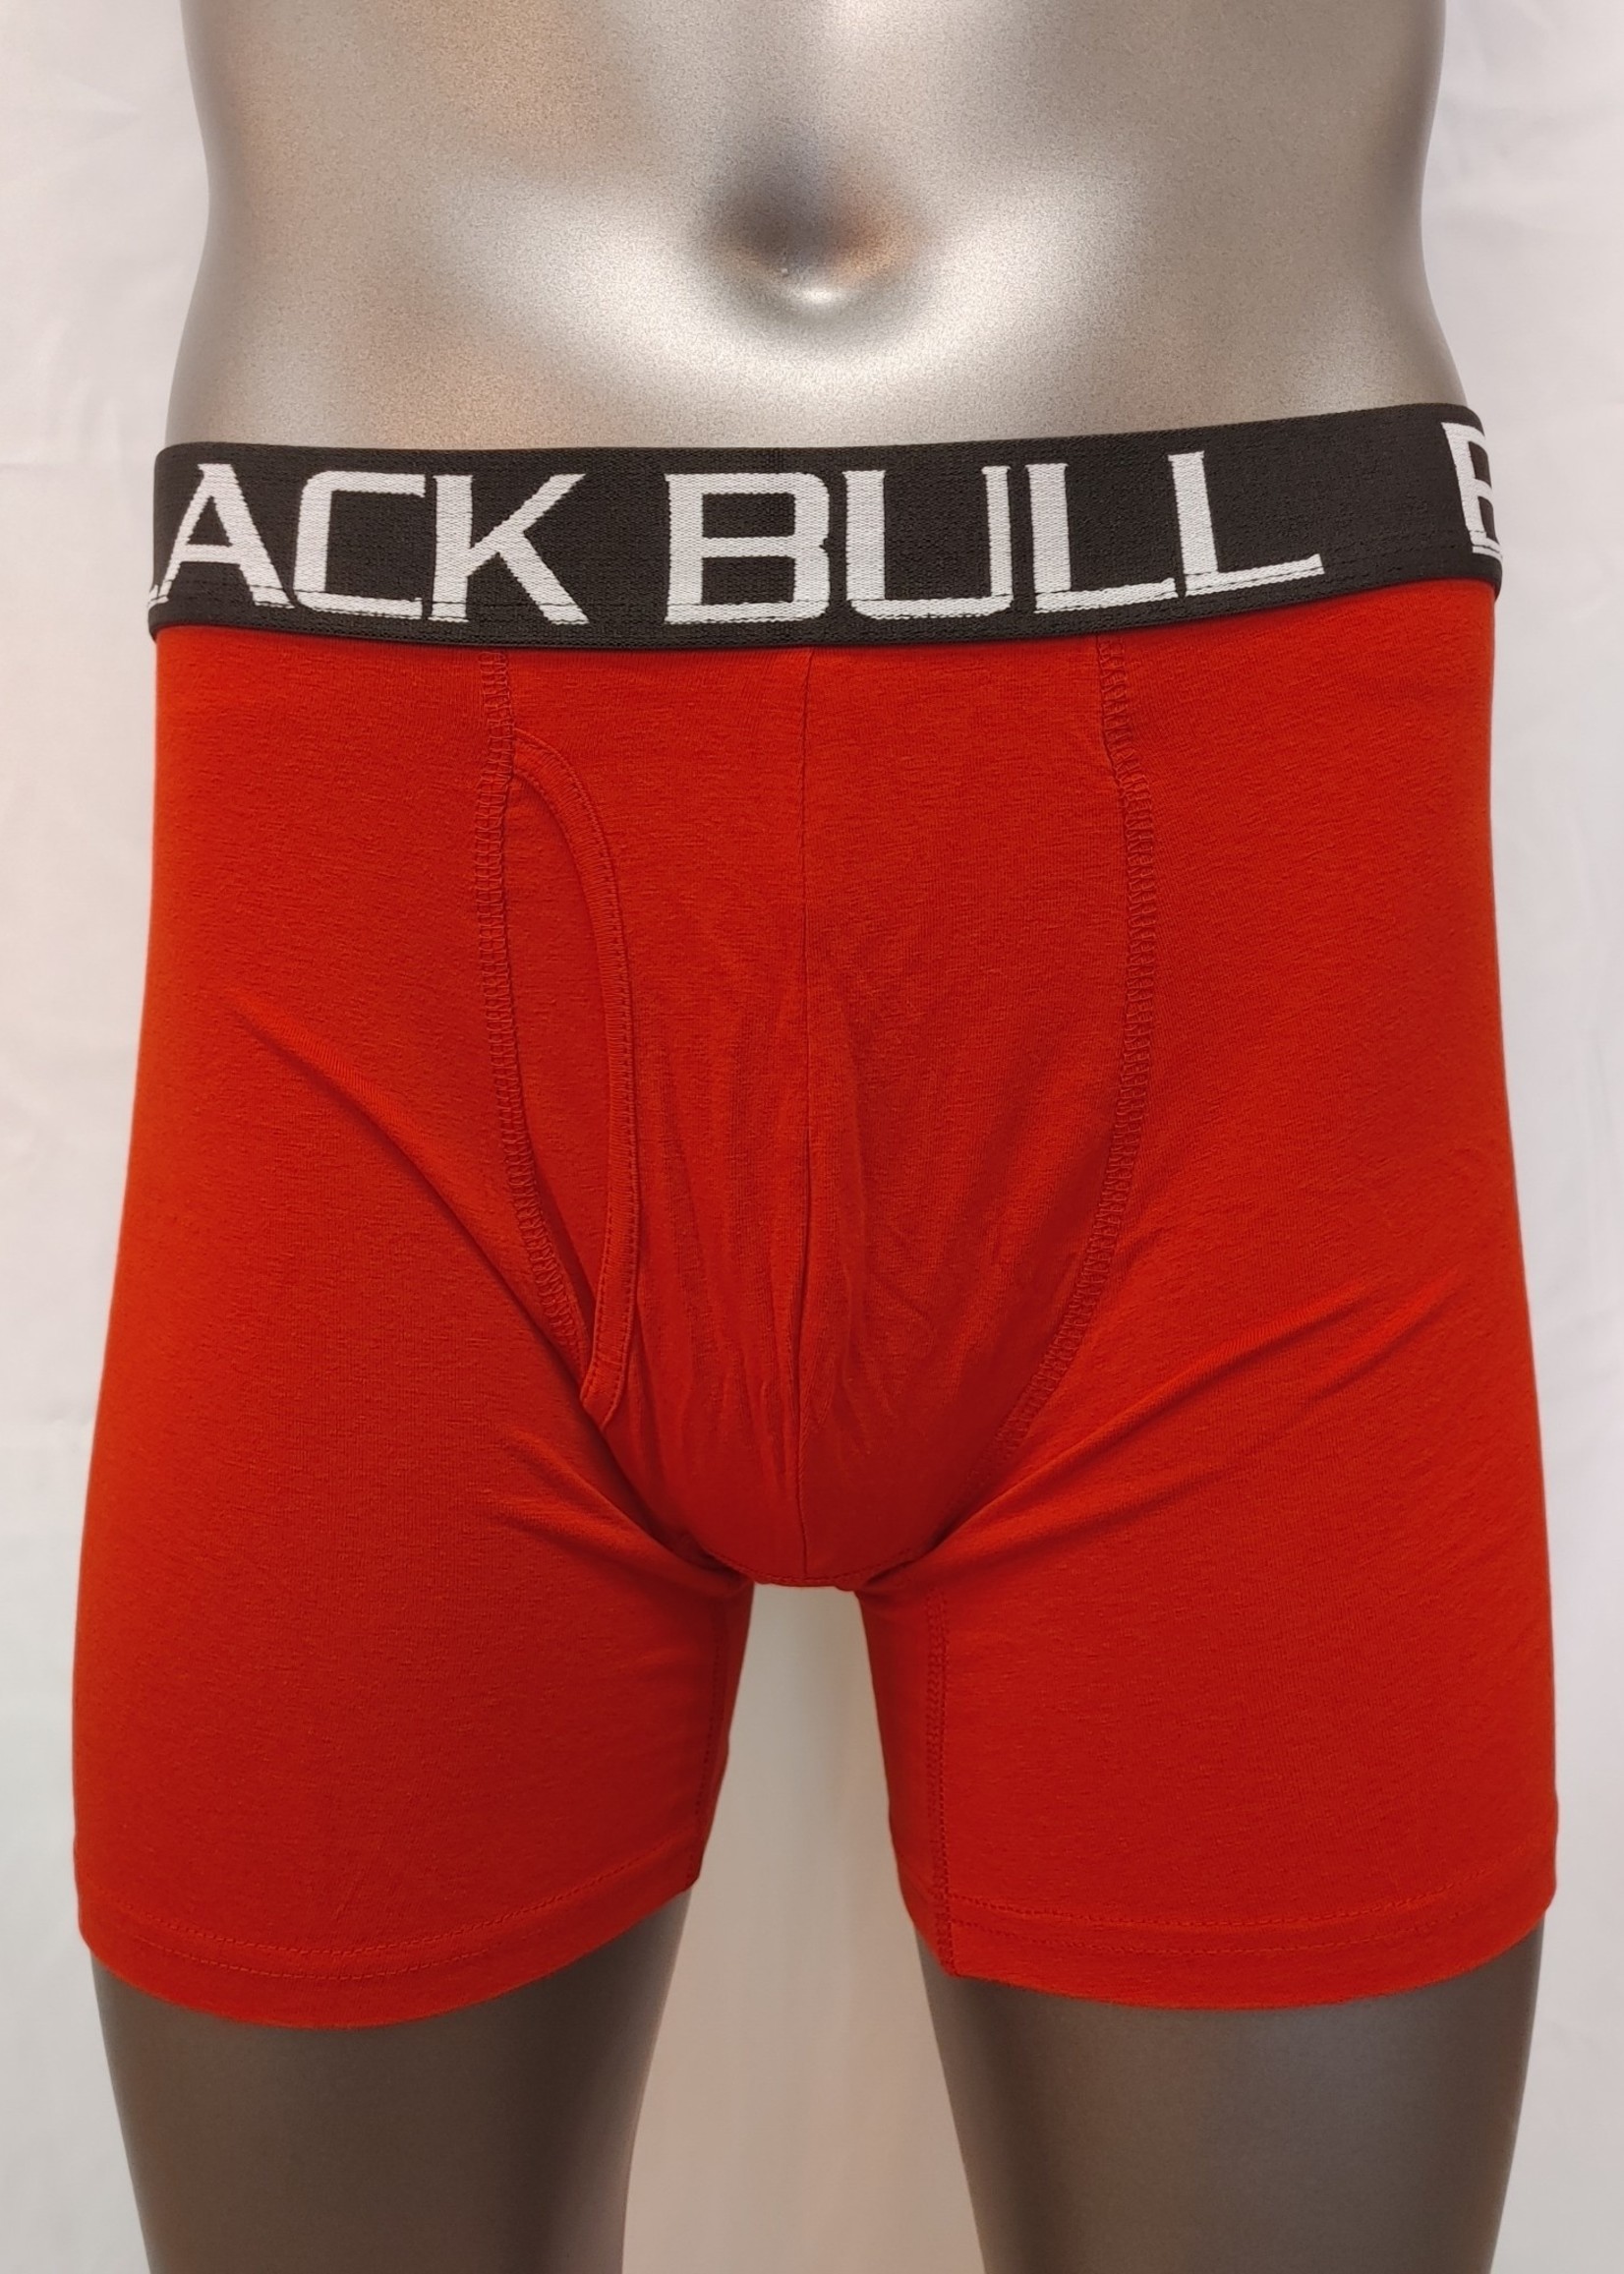 Black Bull Mens  underwear